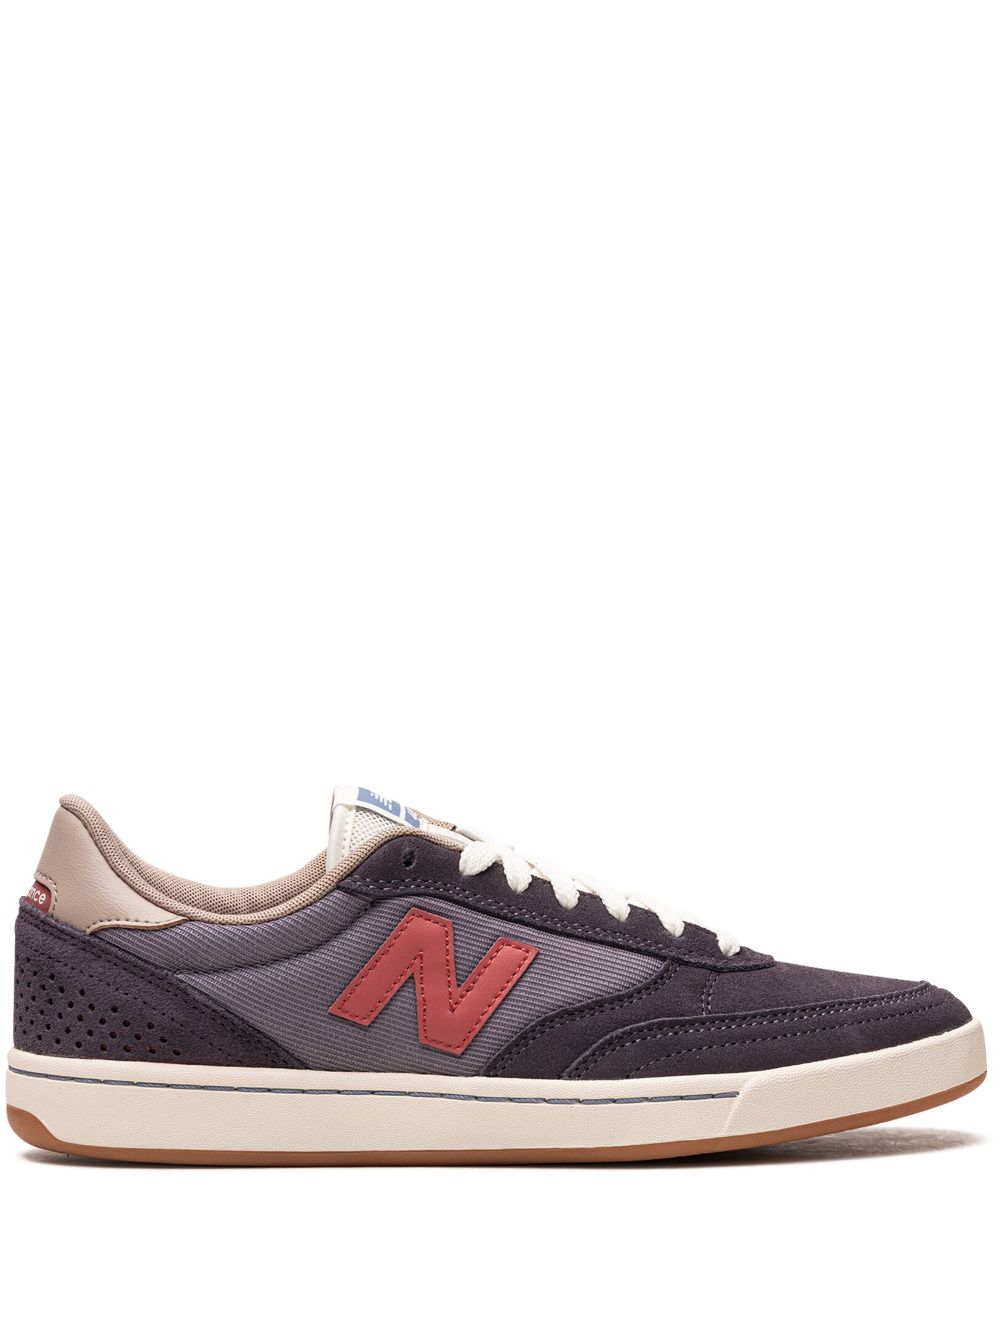 New Balance Numeric 440 "Navy/Red" sneakers - Purple von New Balance